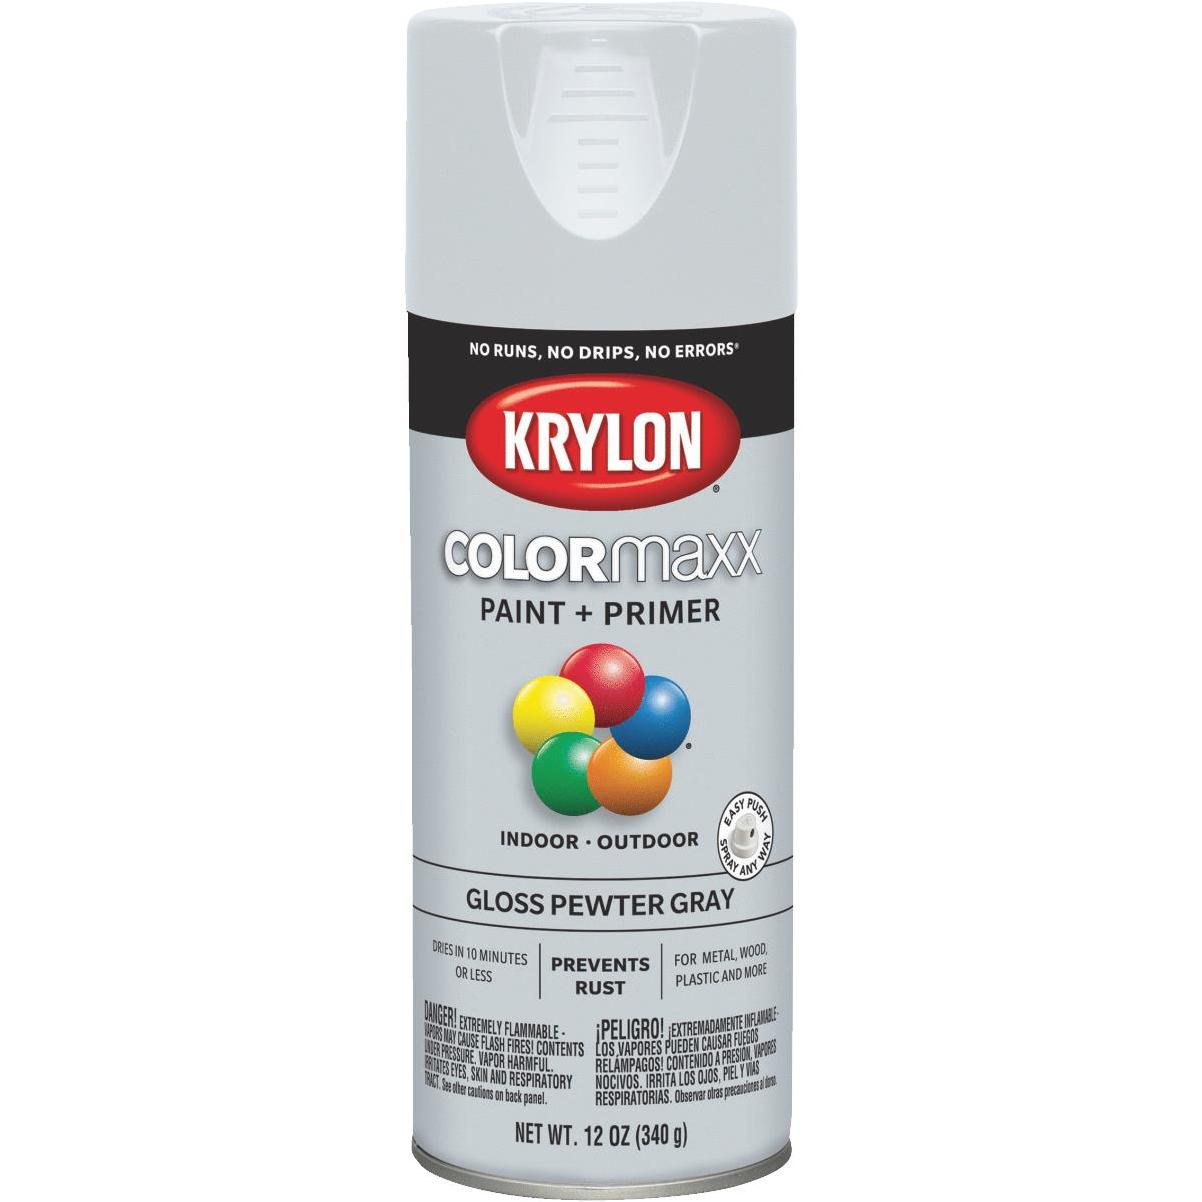 Rust-Oleum Professional Gray 15 Oz. All-Purpose Spray Paint Primer